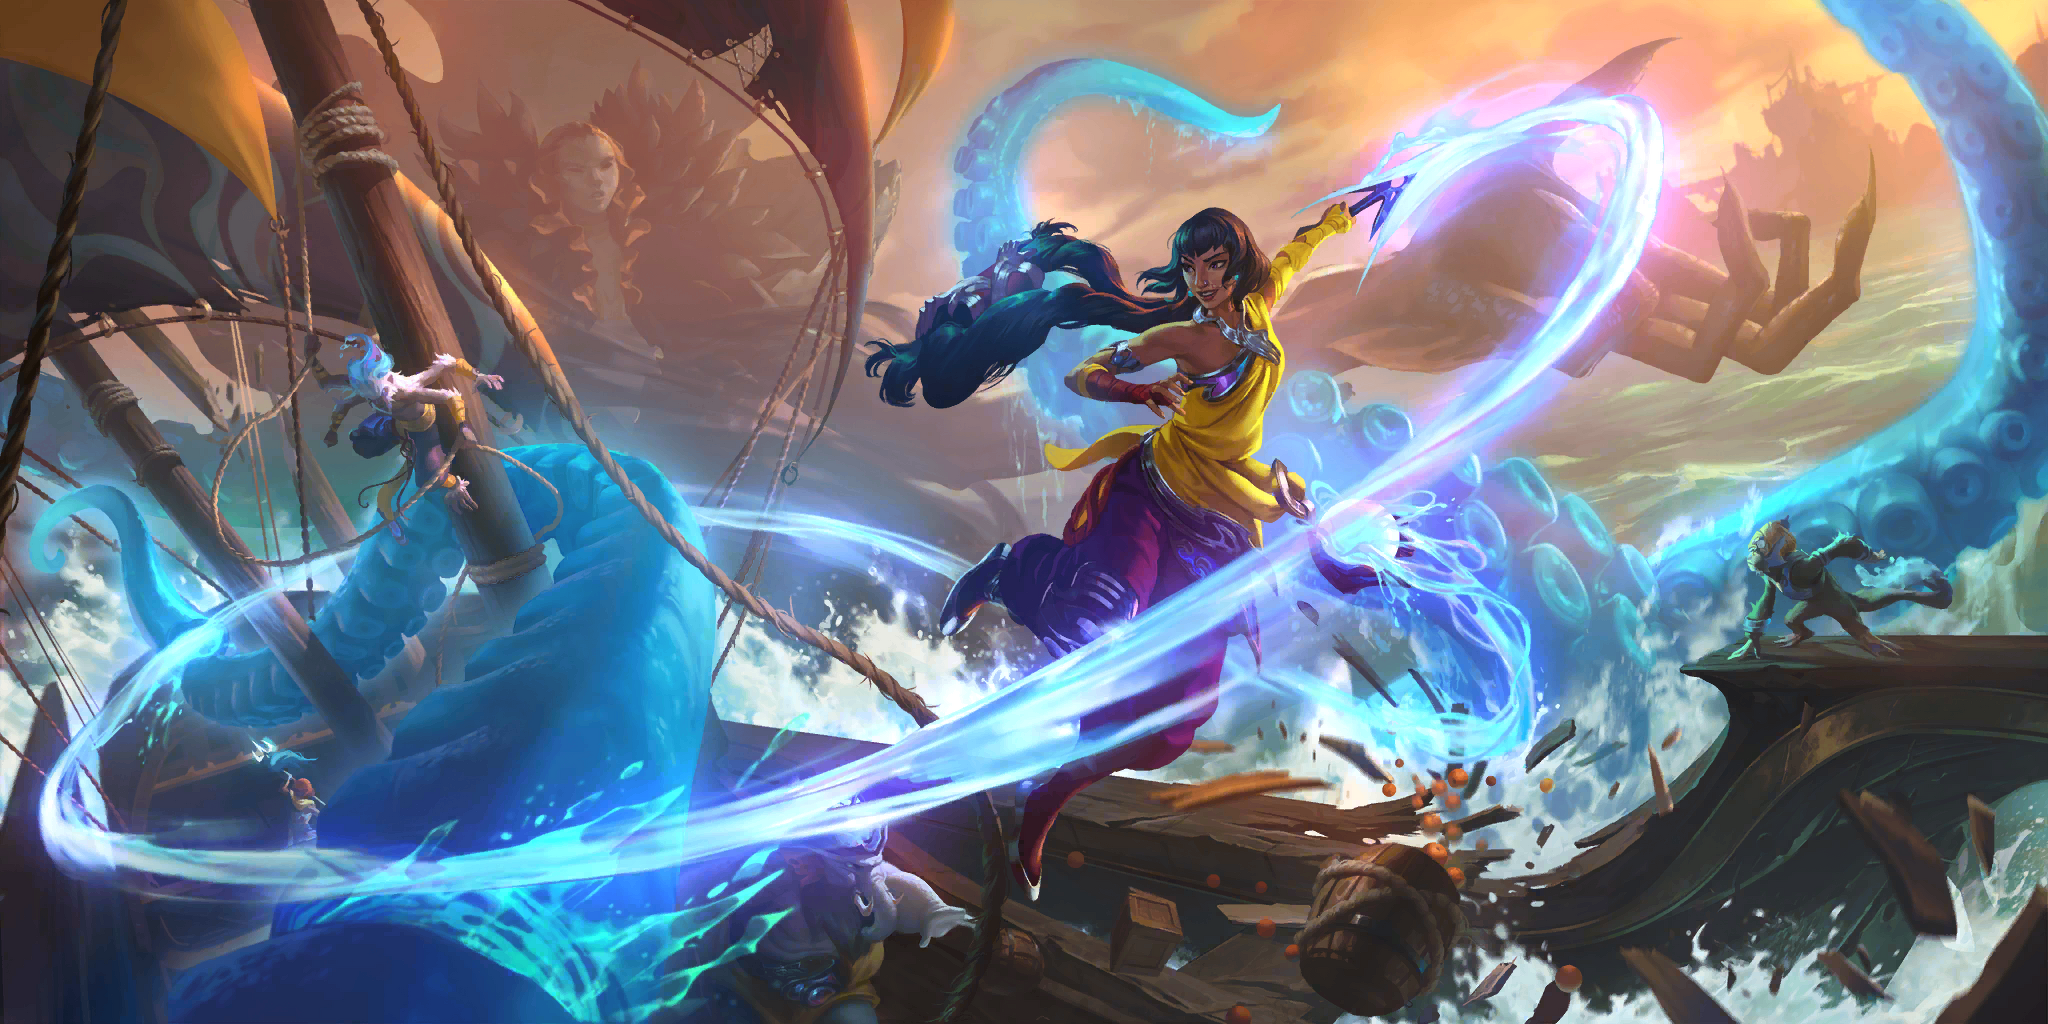 Nilah  New Champion - Legends of Runeterra 